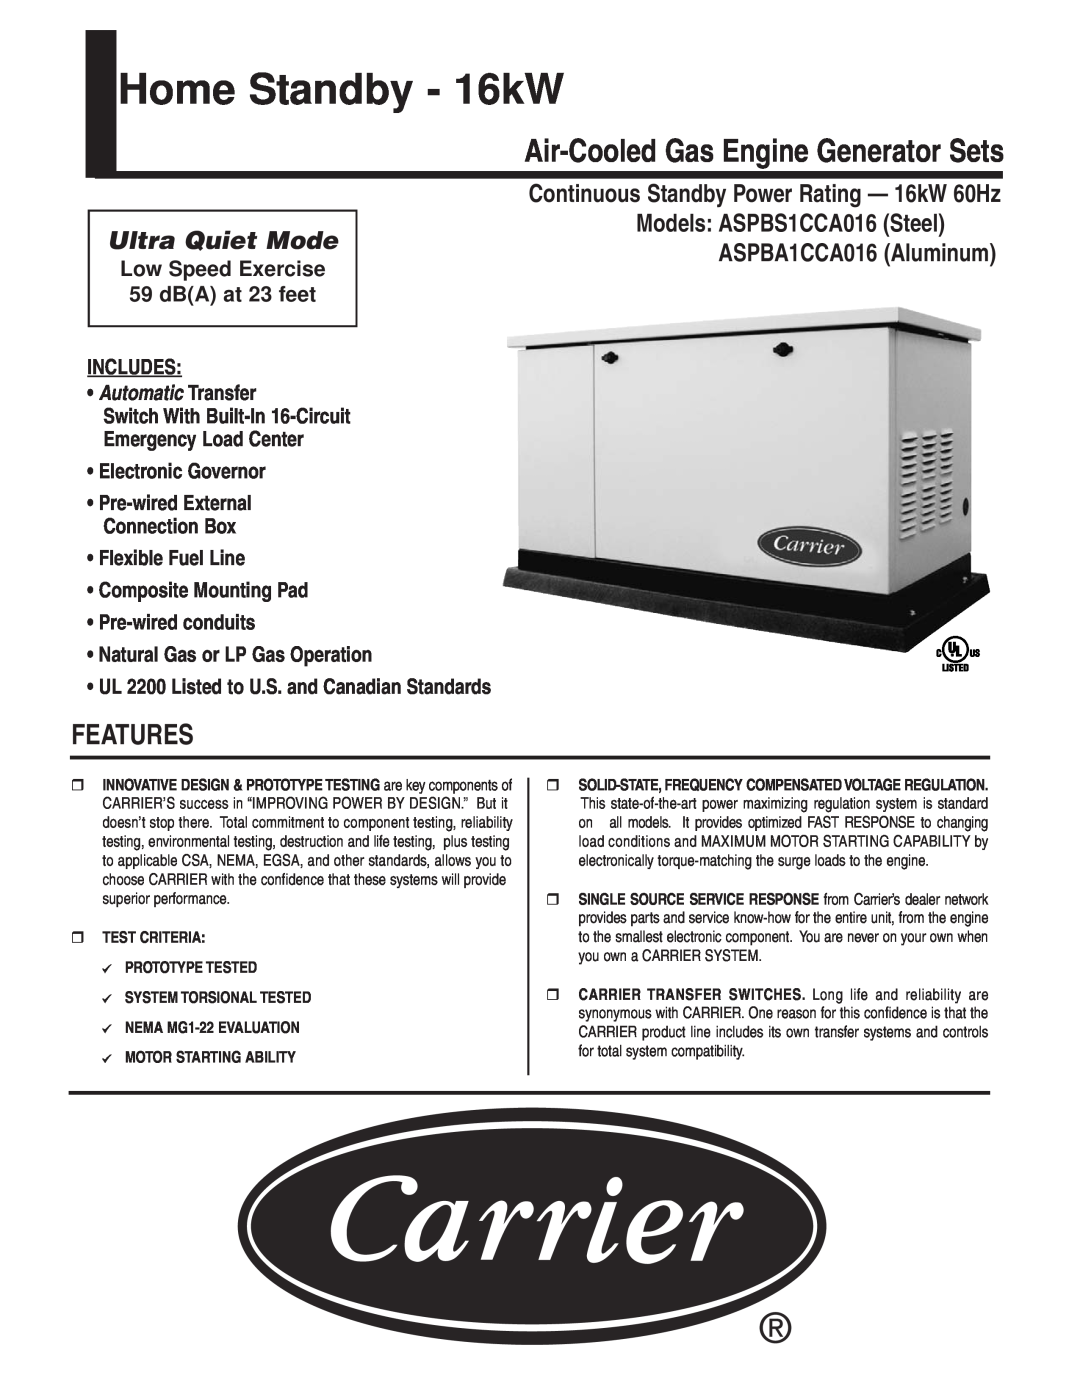 Carrier manual Air-CooledGas Engine Generator Sets, Models ASPBS1CCA016 Steel ASPBA1CCA016 Aluminum, Features 